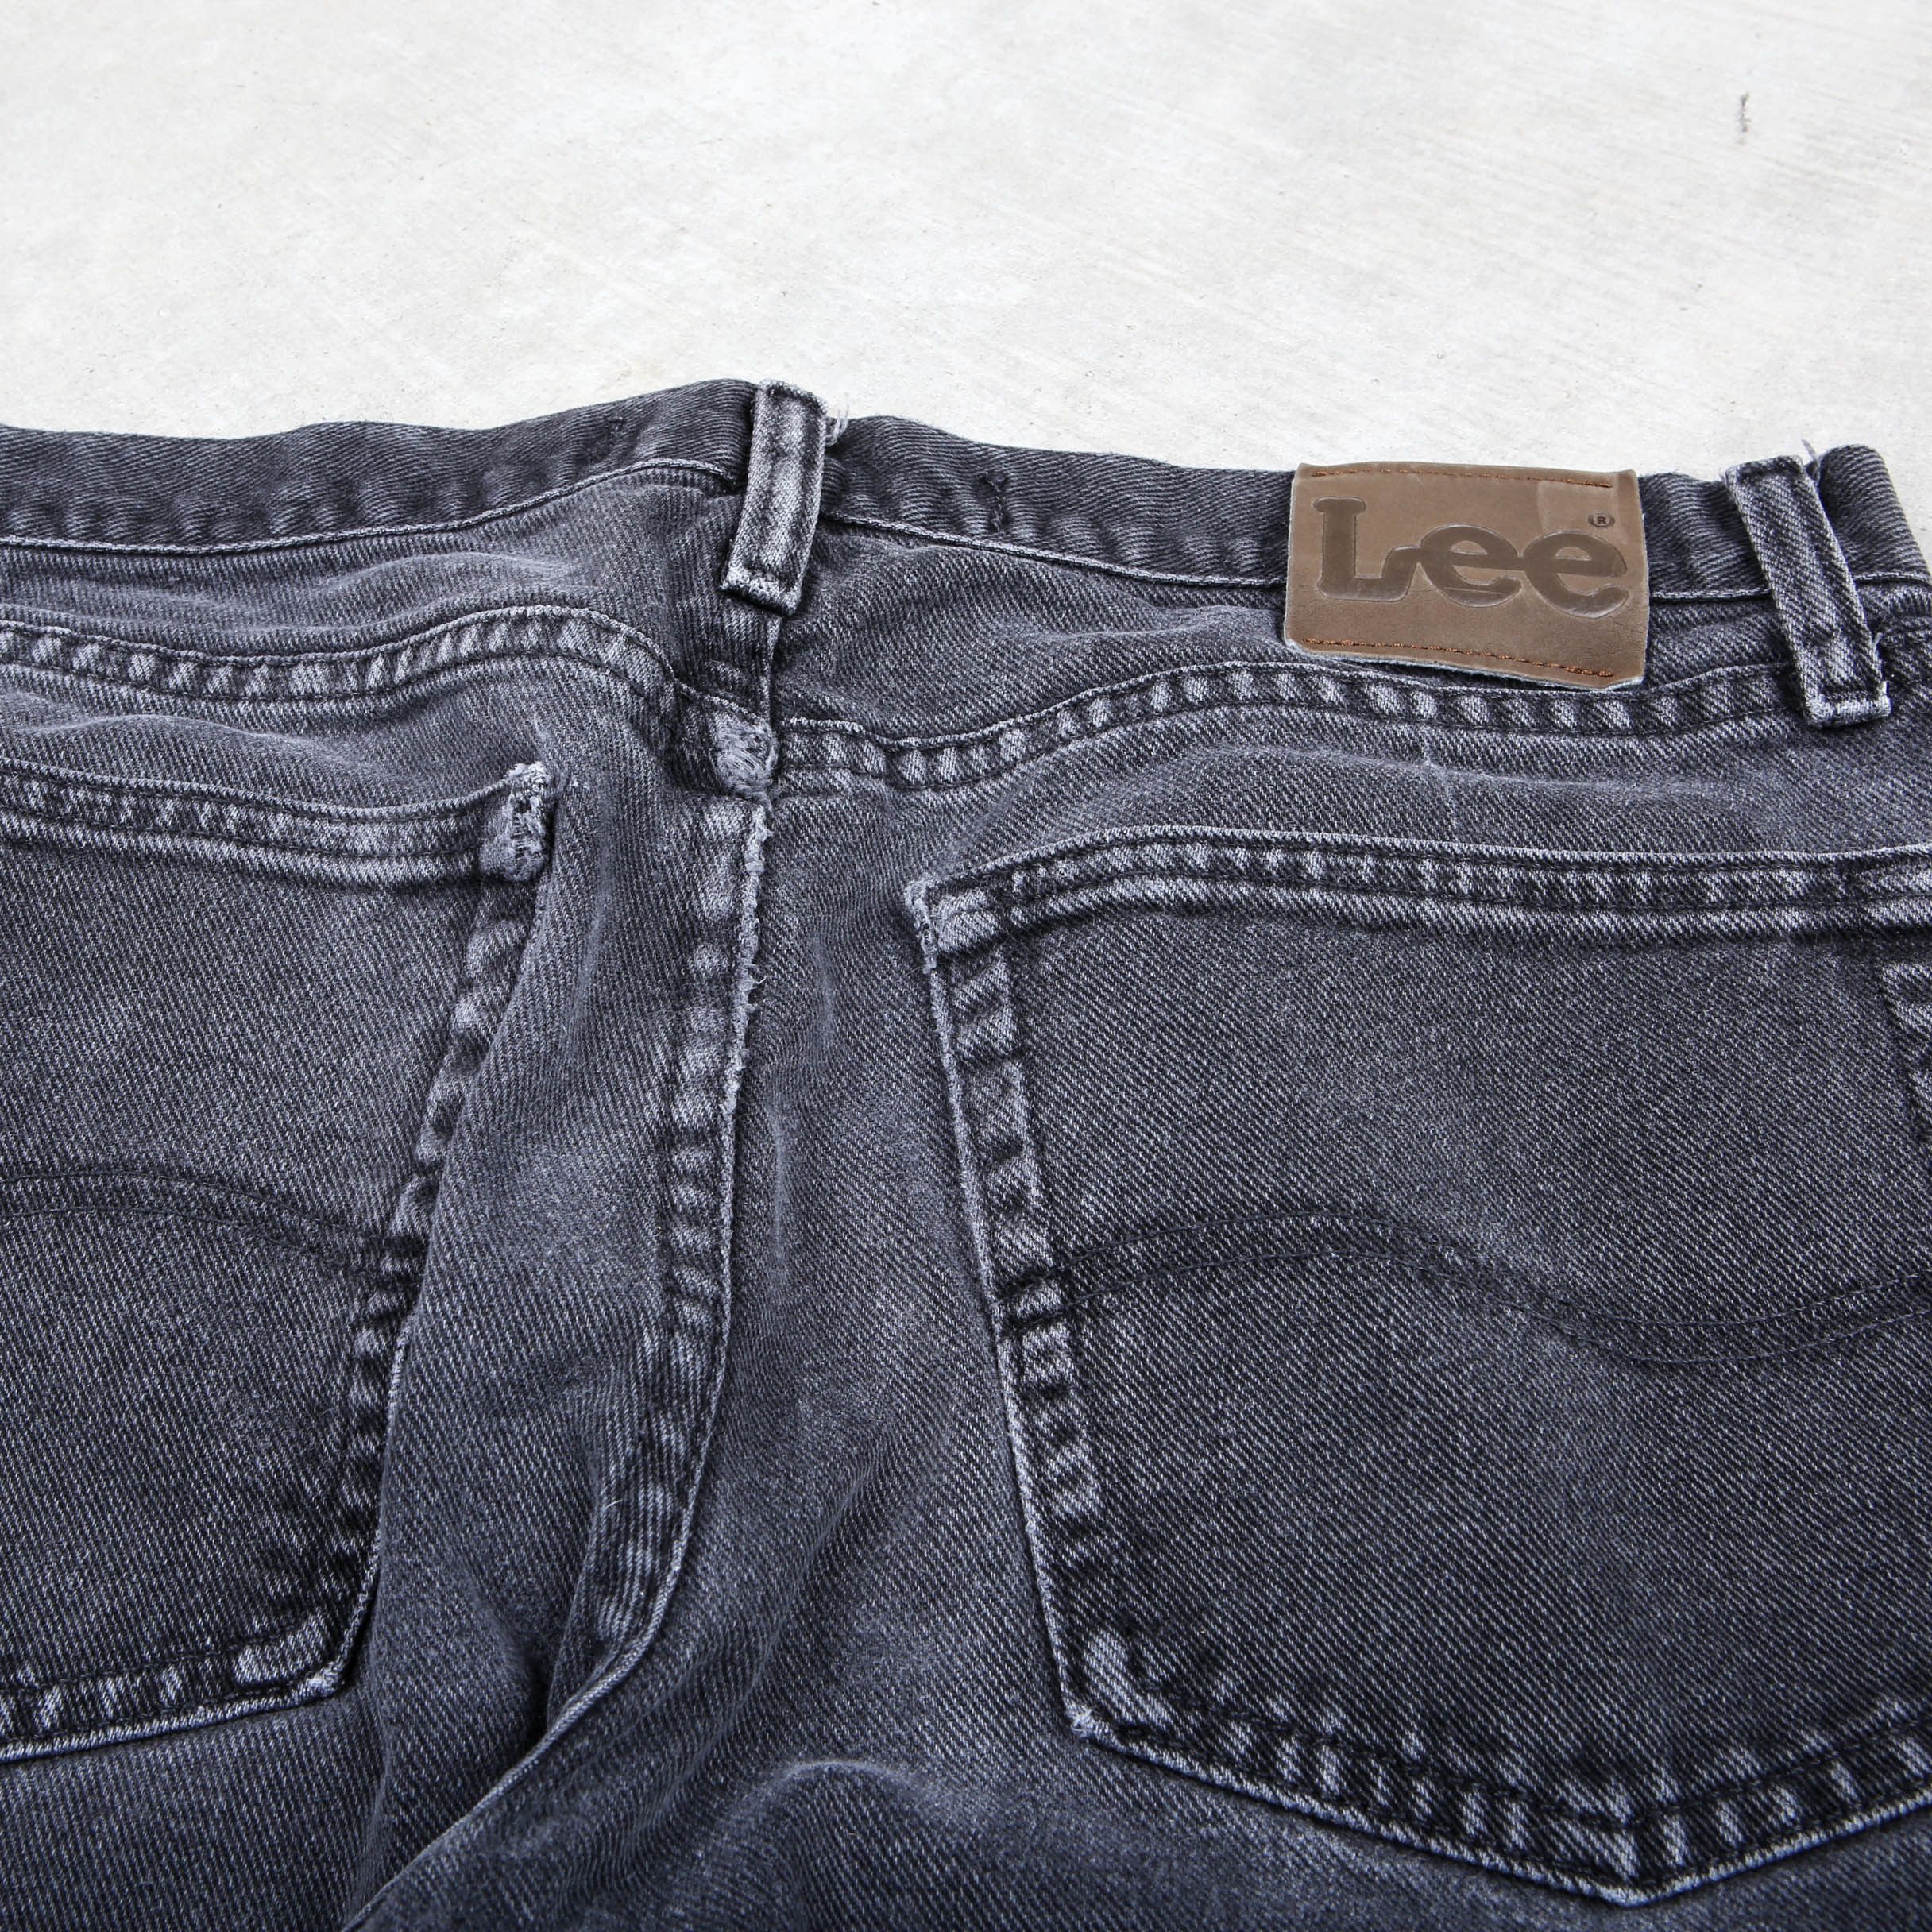 Vintage Vintage Lee's Denim Faded Jeans 33 Late 90s Size US 33 - 11 Thumbnail